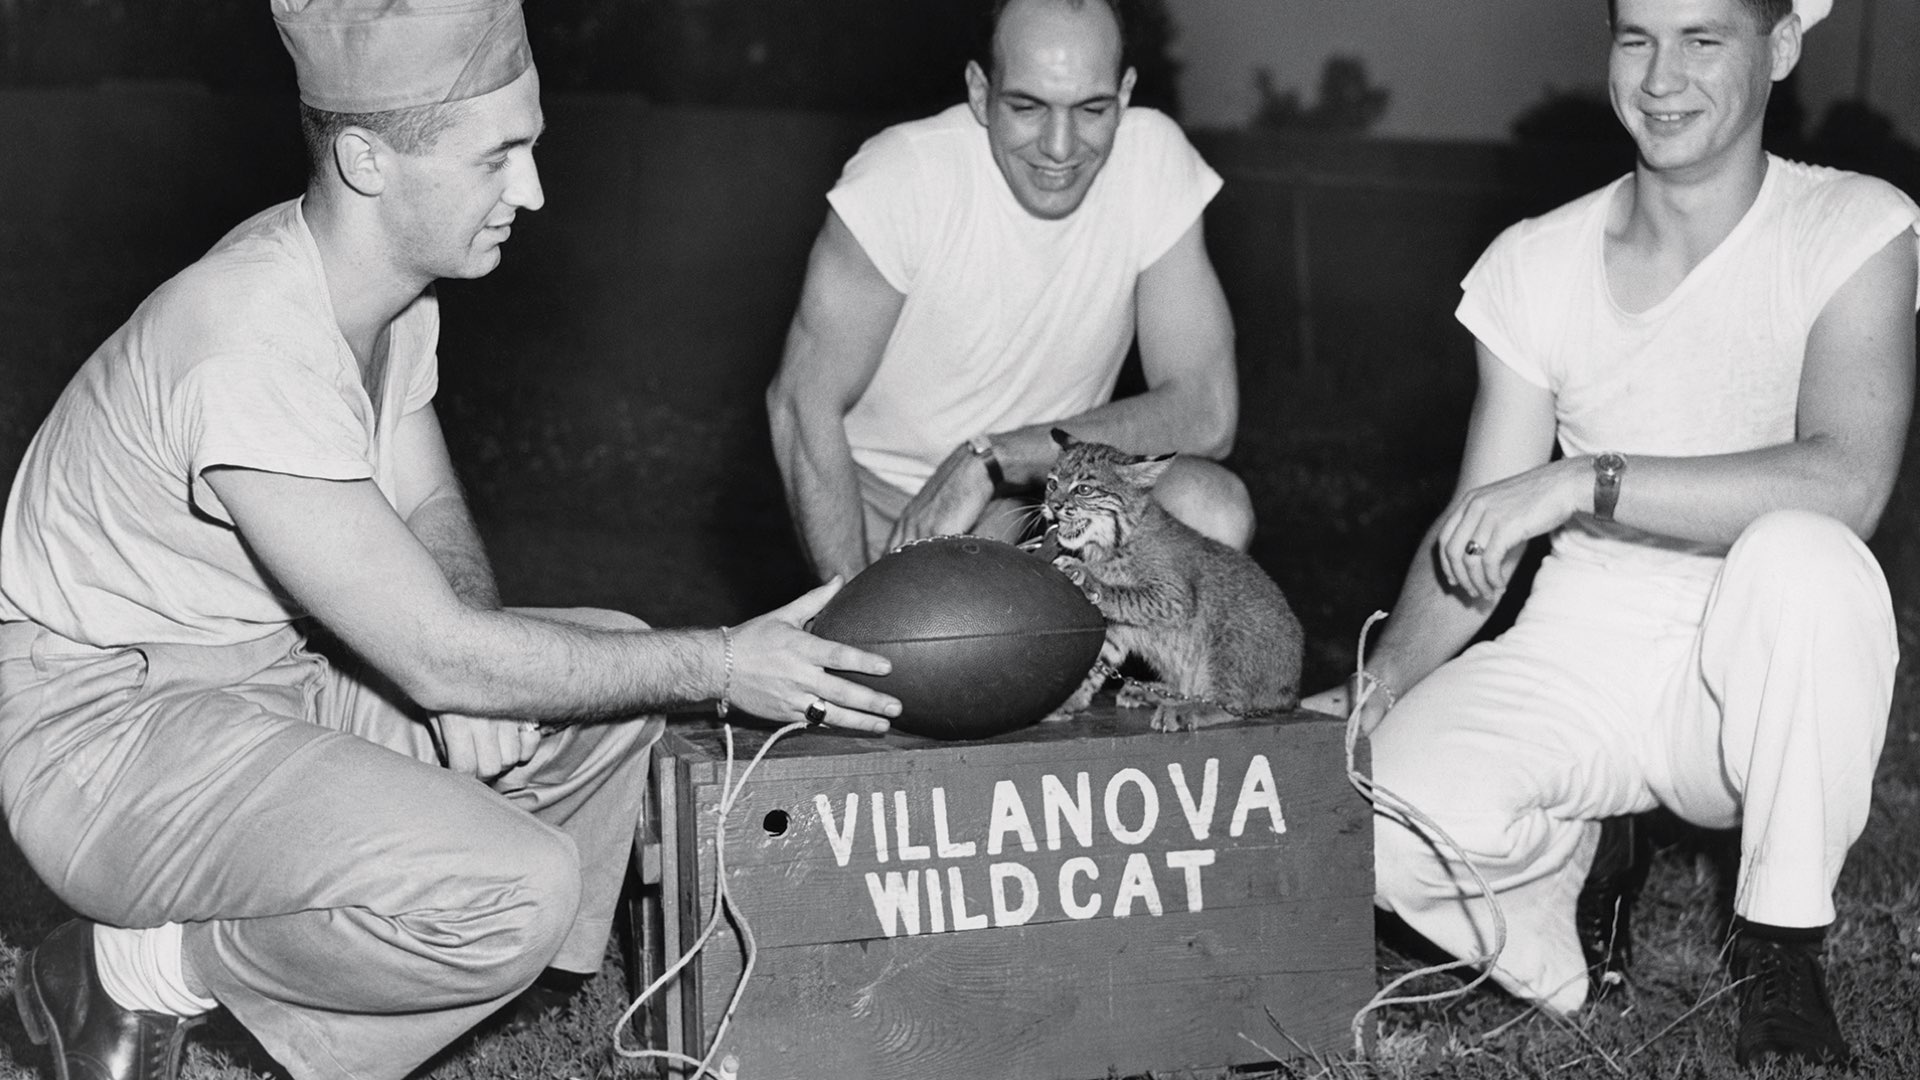 Bob Austin, Clyde Cobb and James Halpin Junior with Count Villan II, Villanova mascot, in summer 1945.